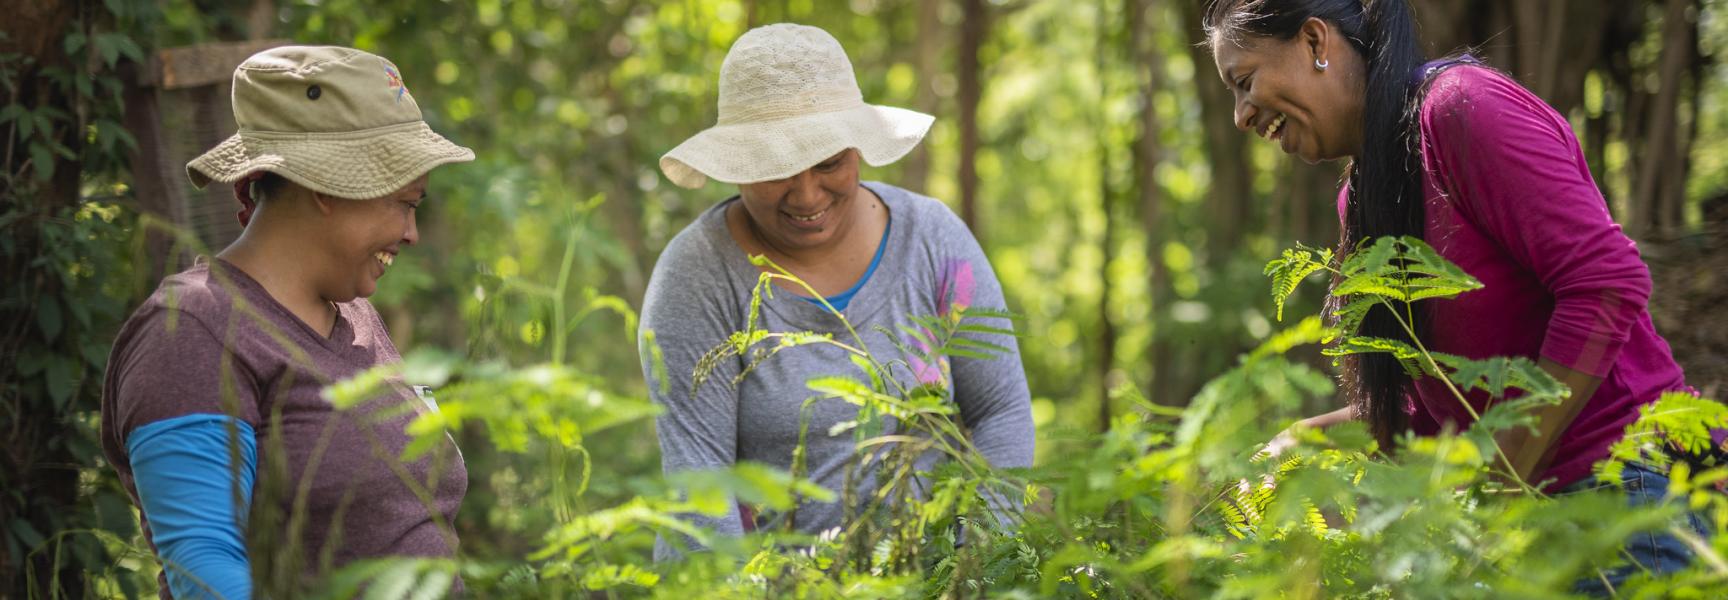 Women in costa rica among trees